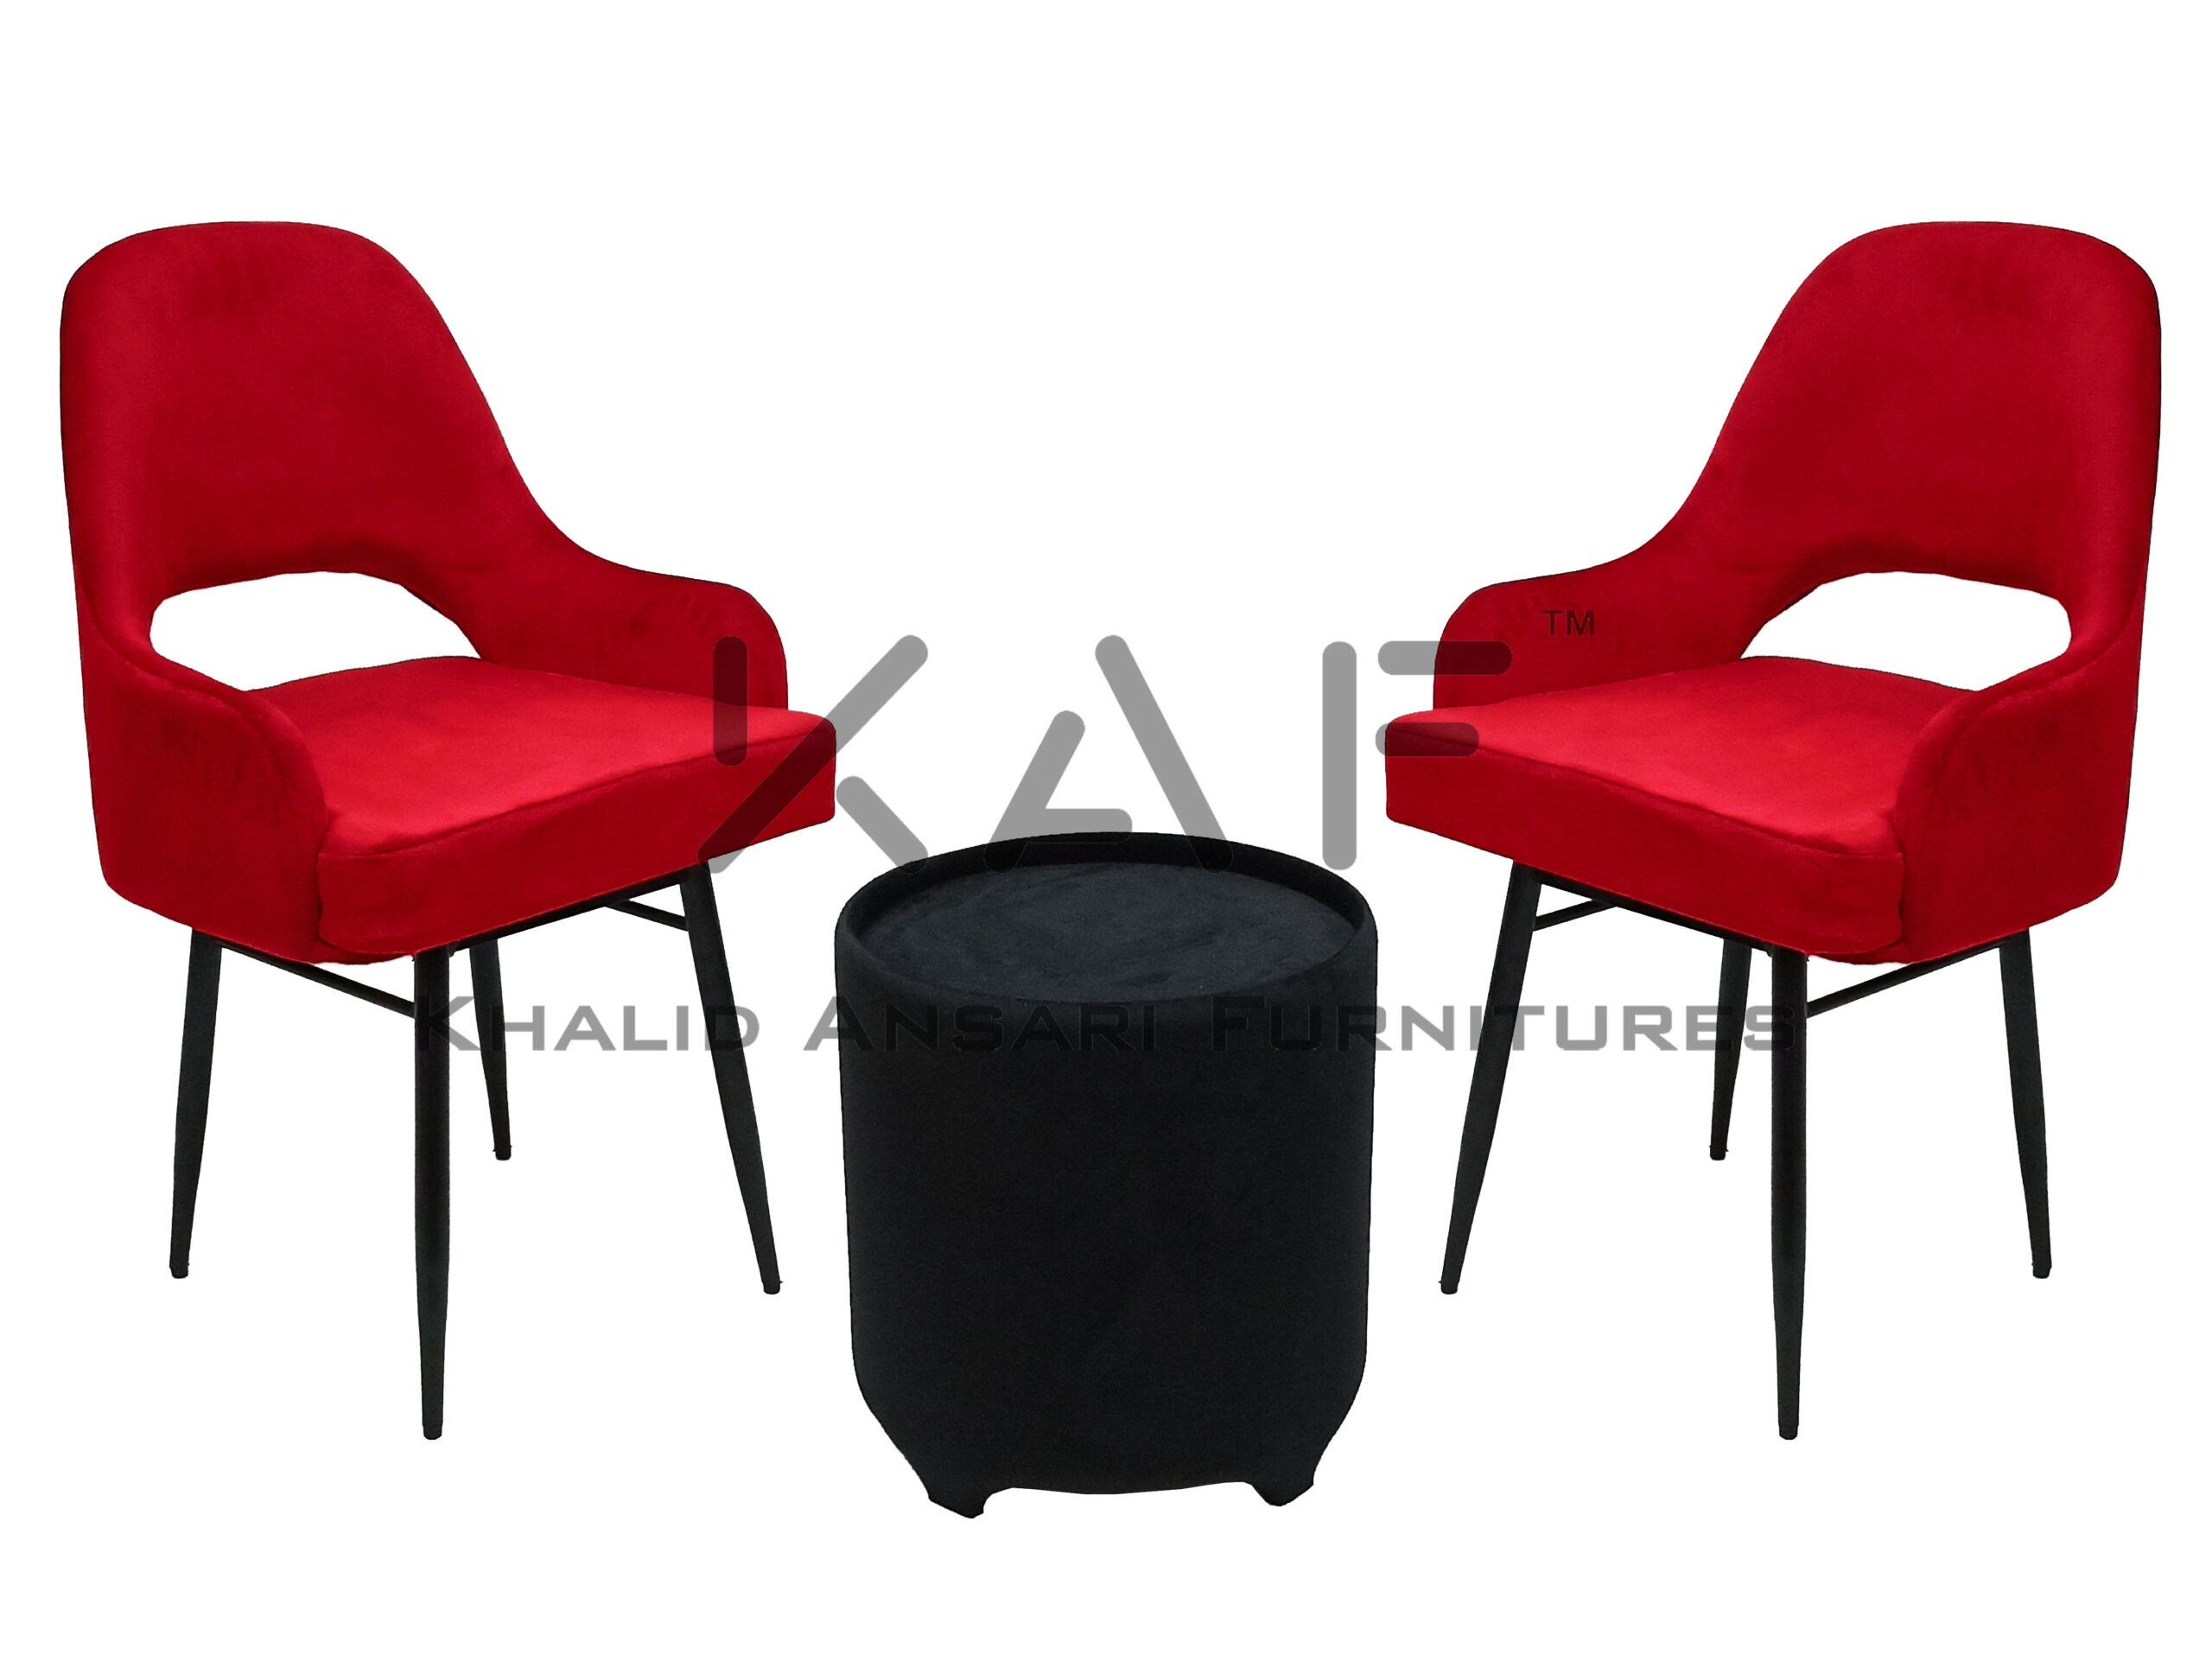 Bed Room Premium Chair Arm Hole Design Red Velvet set with Black Velvet Tea Table - 2 Chairs + 1 Table